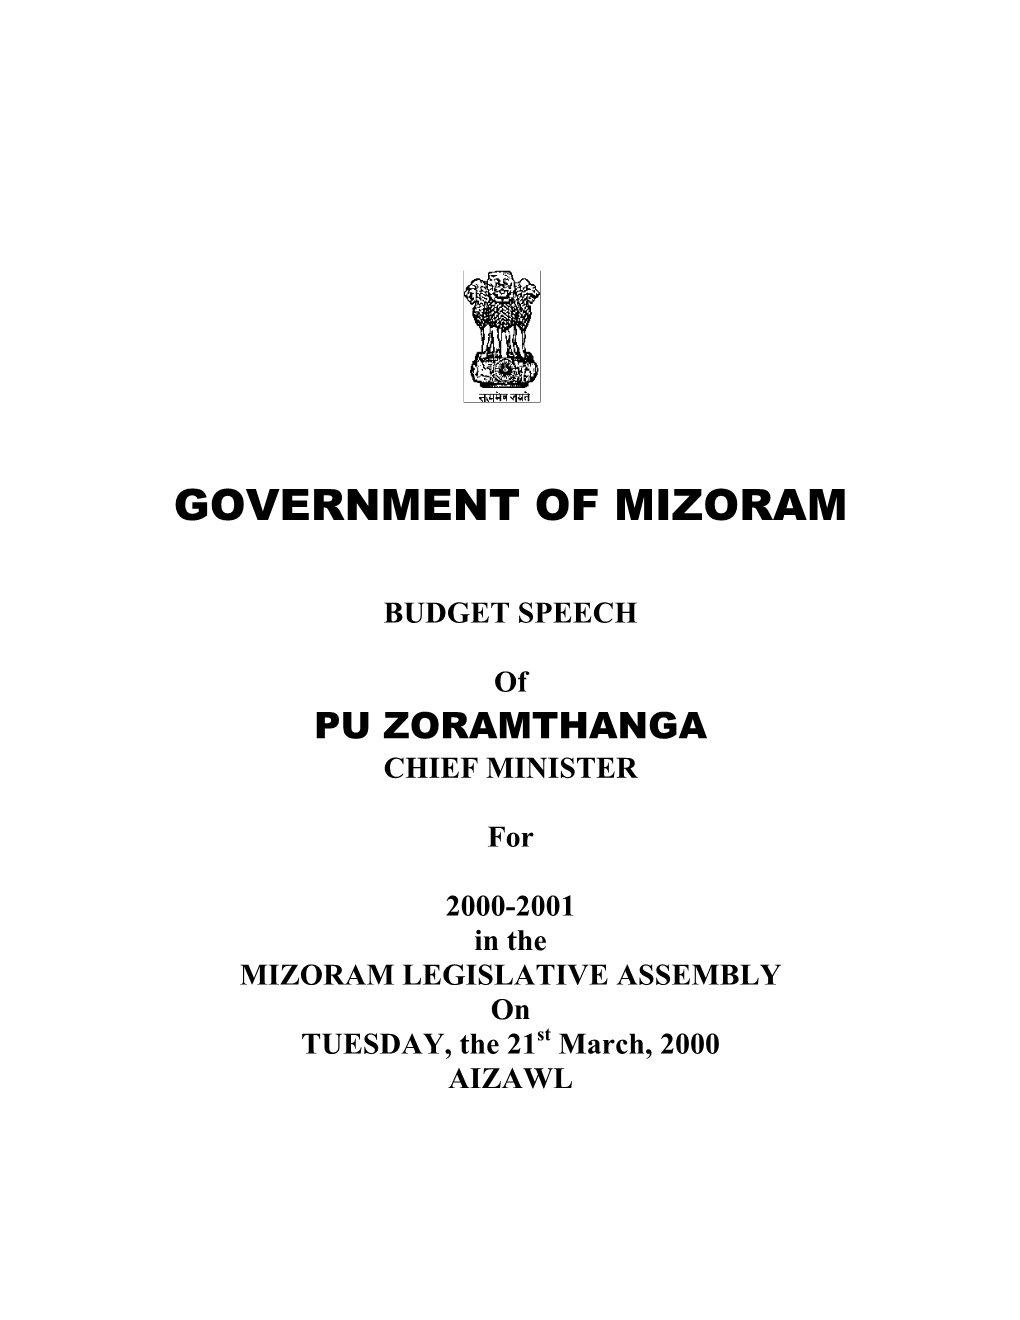 Government of Mizoram